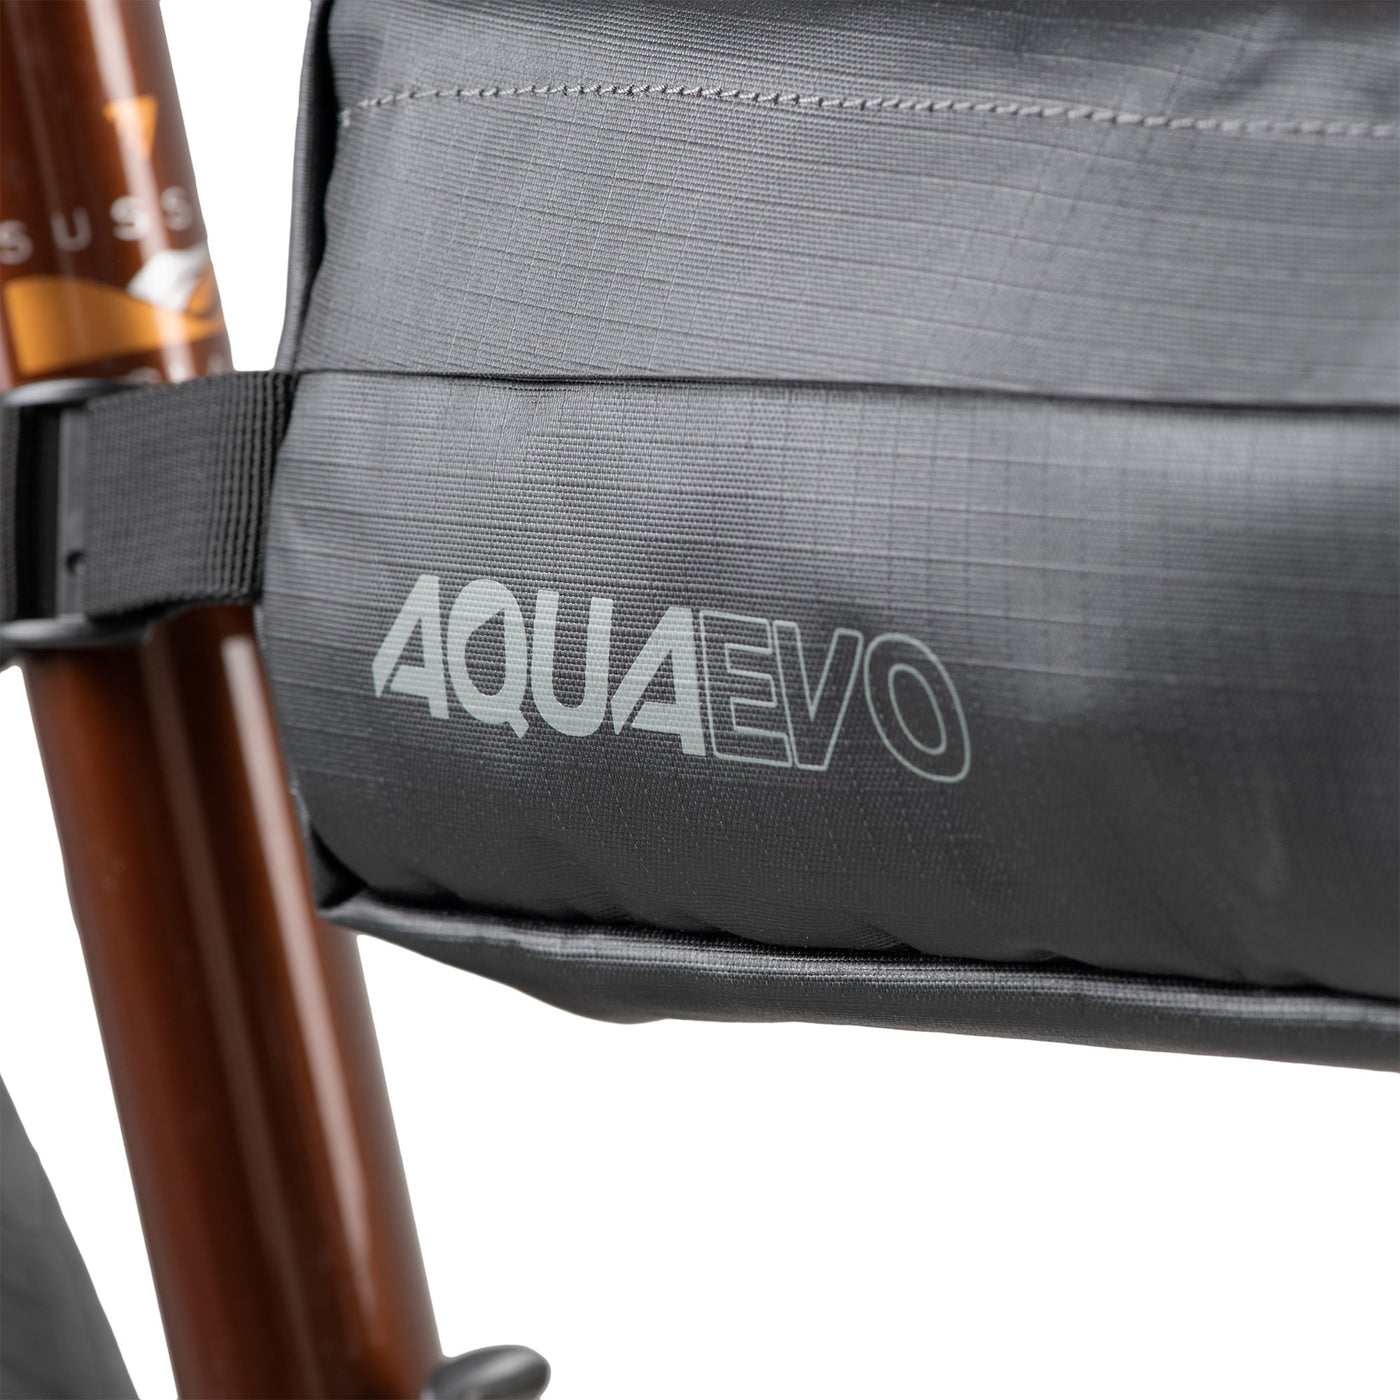 Oxford Aqua Evo Adventure Frame Pack